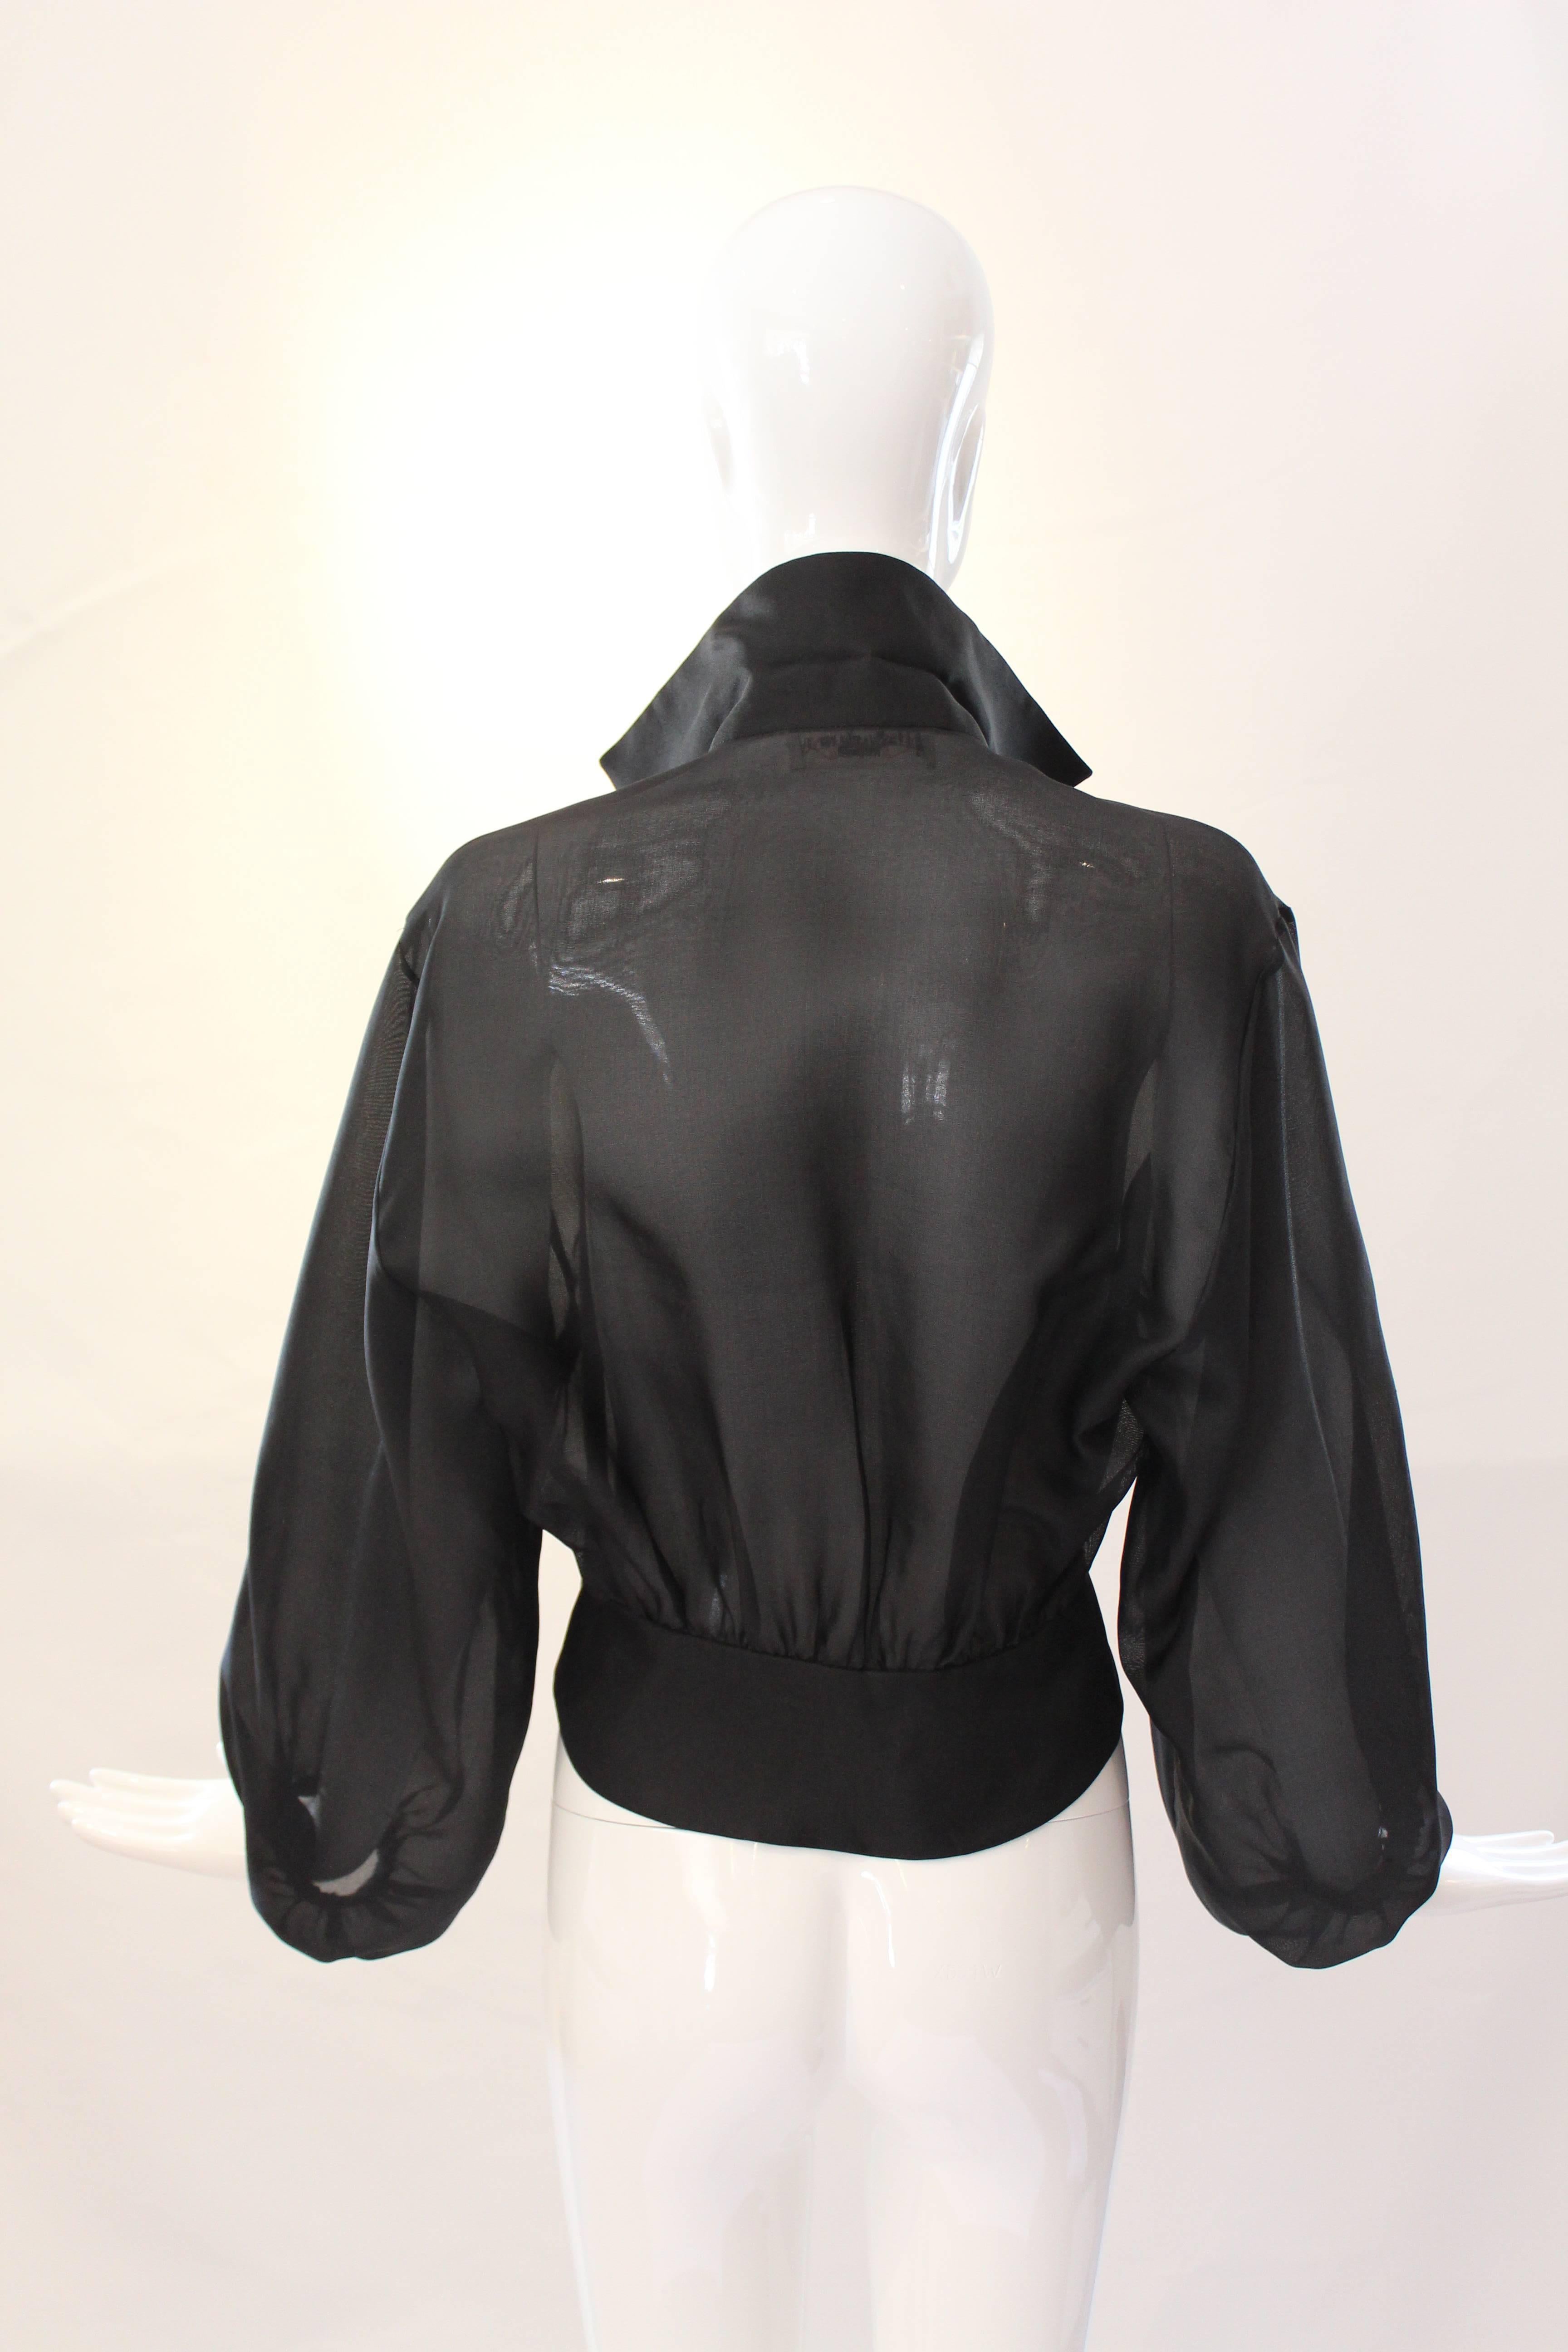 Yves Saint Laurent Rive Gauche Black Sheer Blouse Jacket  2